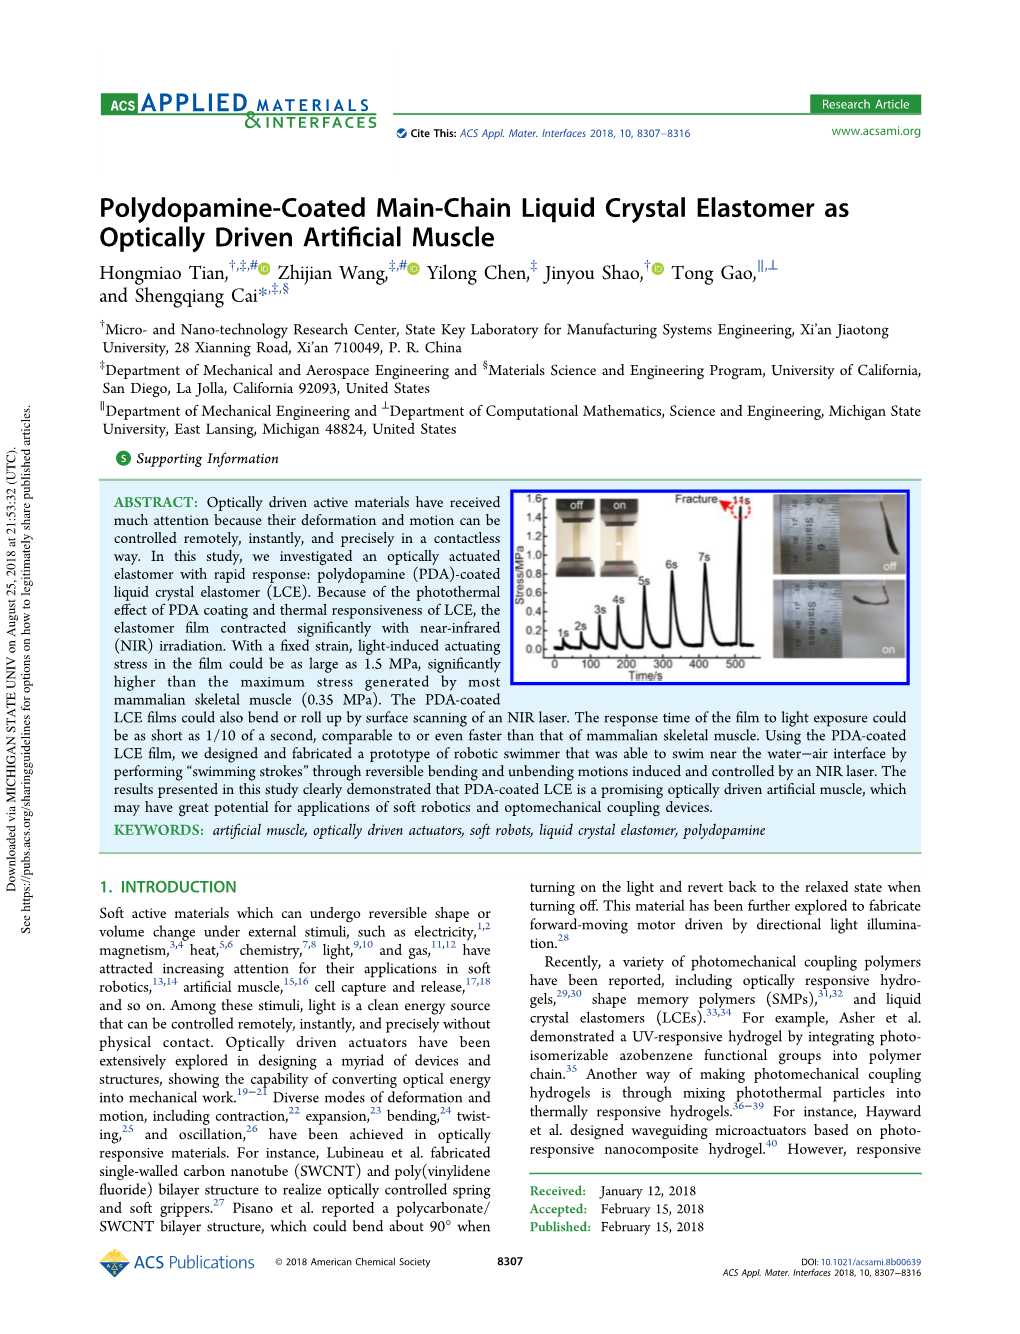 Polydopamine-Coated Main-Chain Liquid Crystal Elastomer As